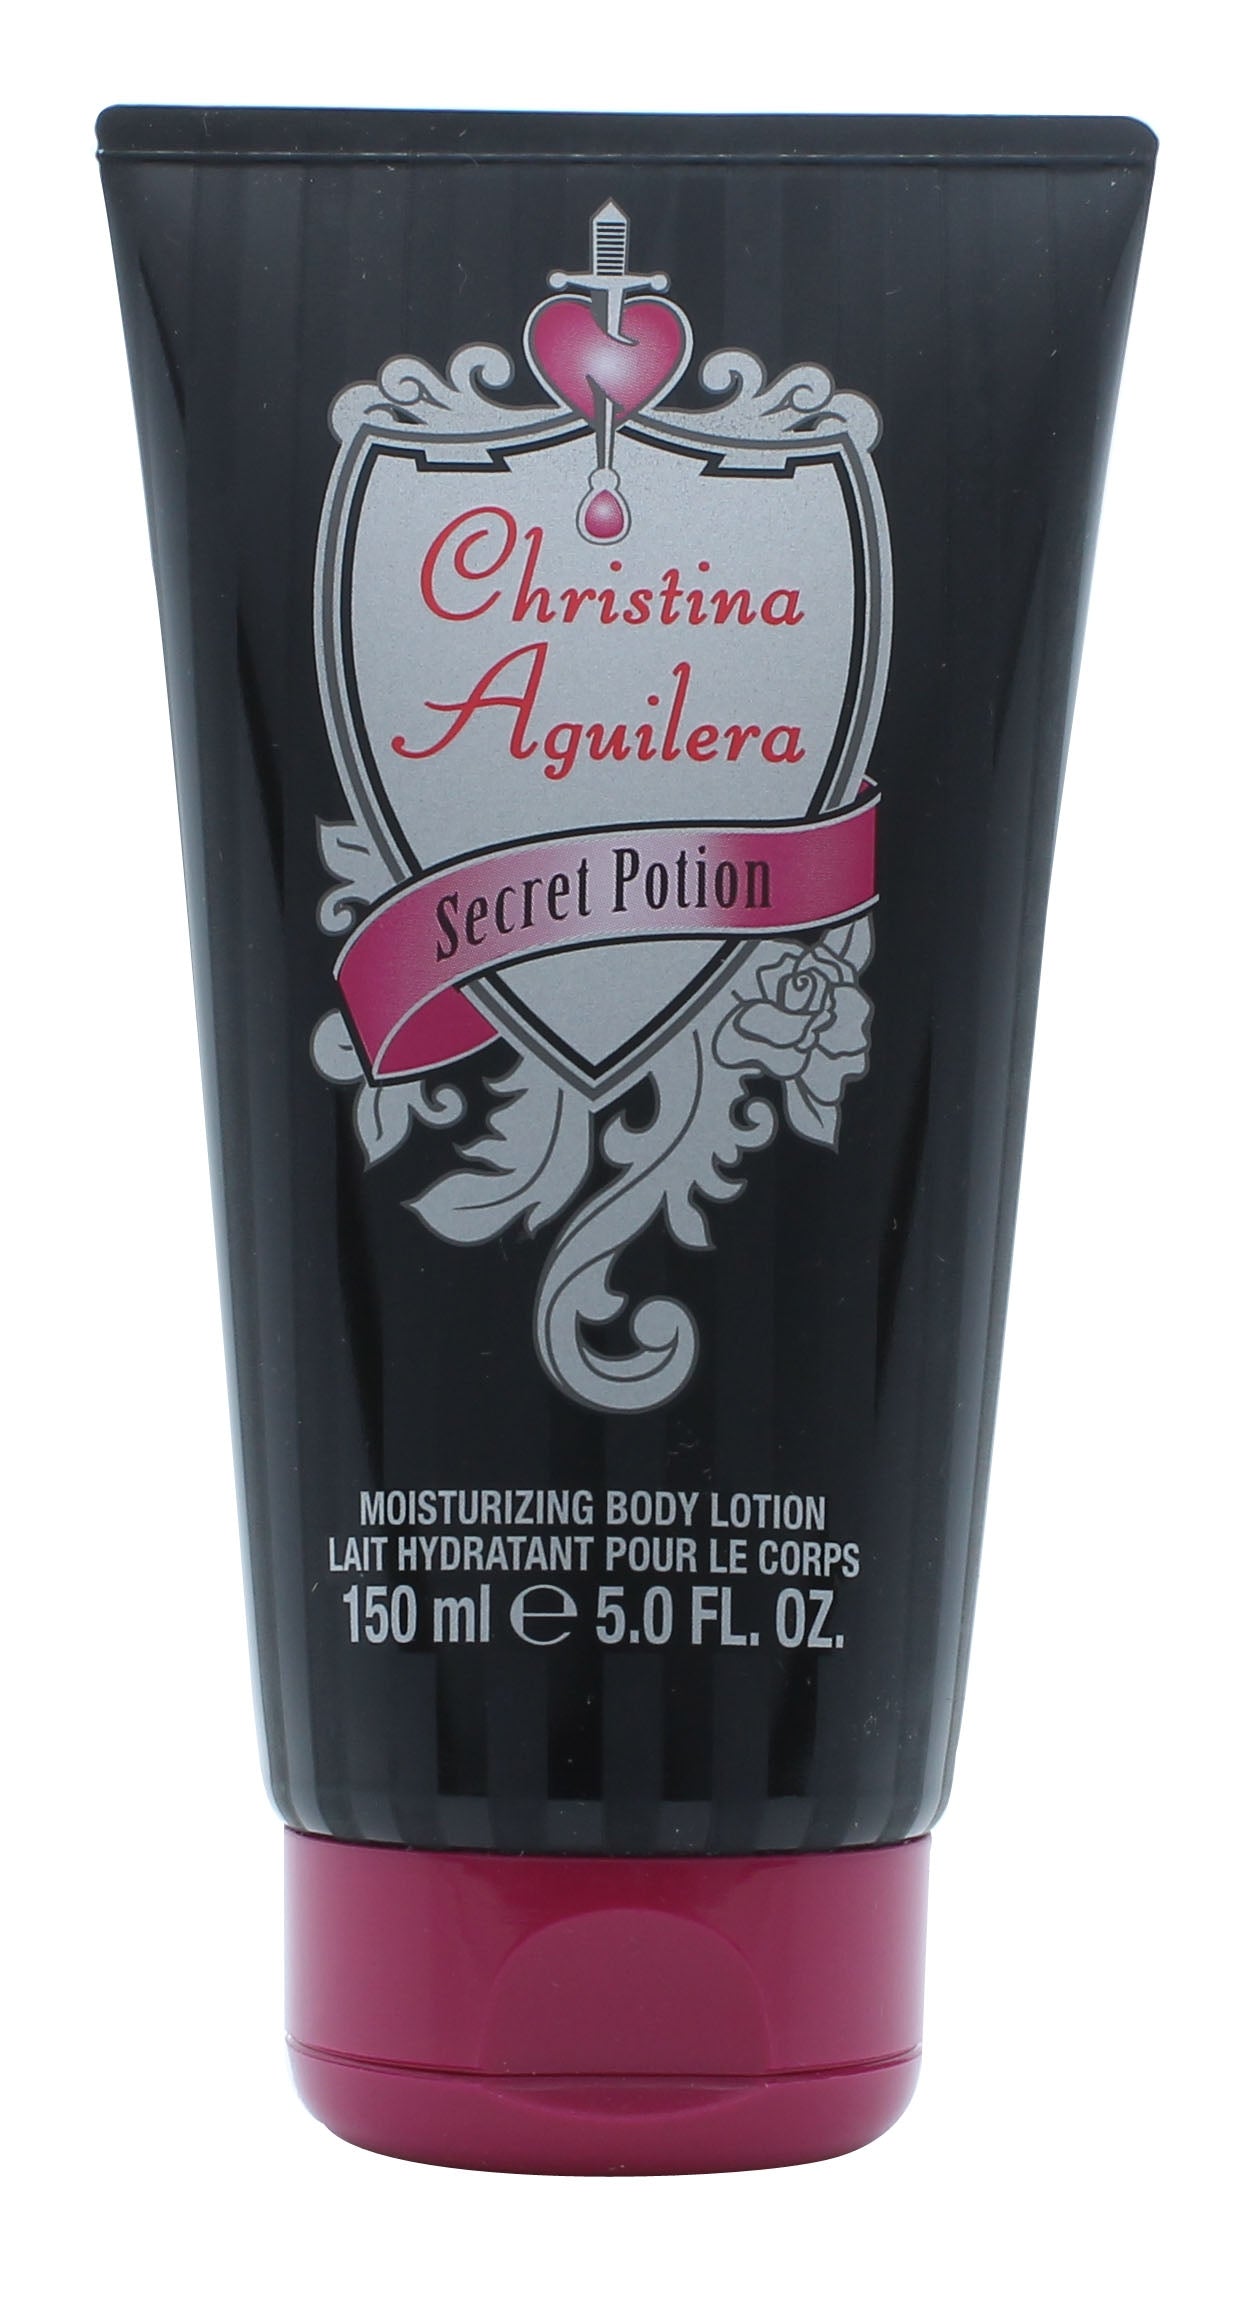 View Christina Aguilera Secret Potion Body Lotion 150ml information